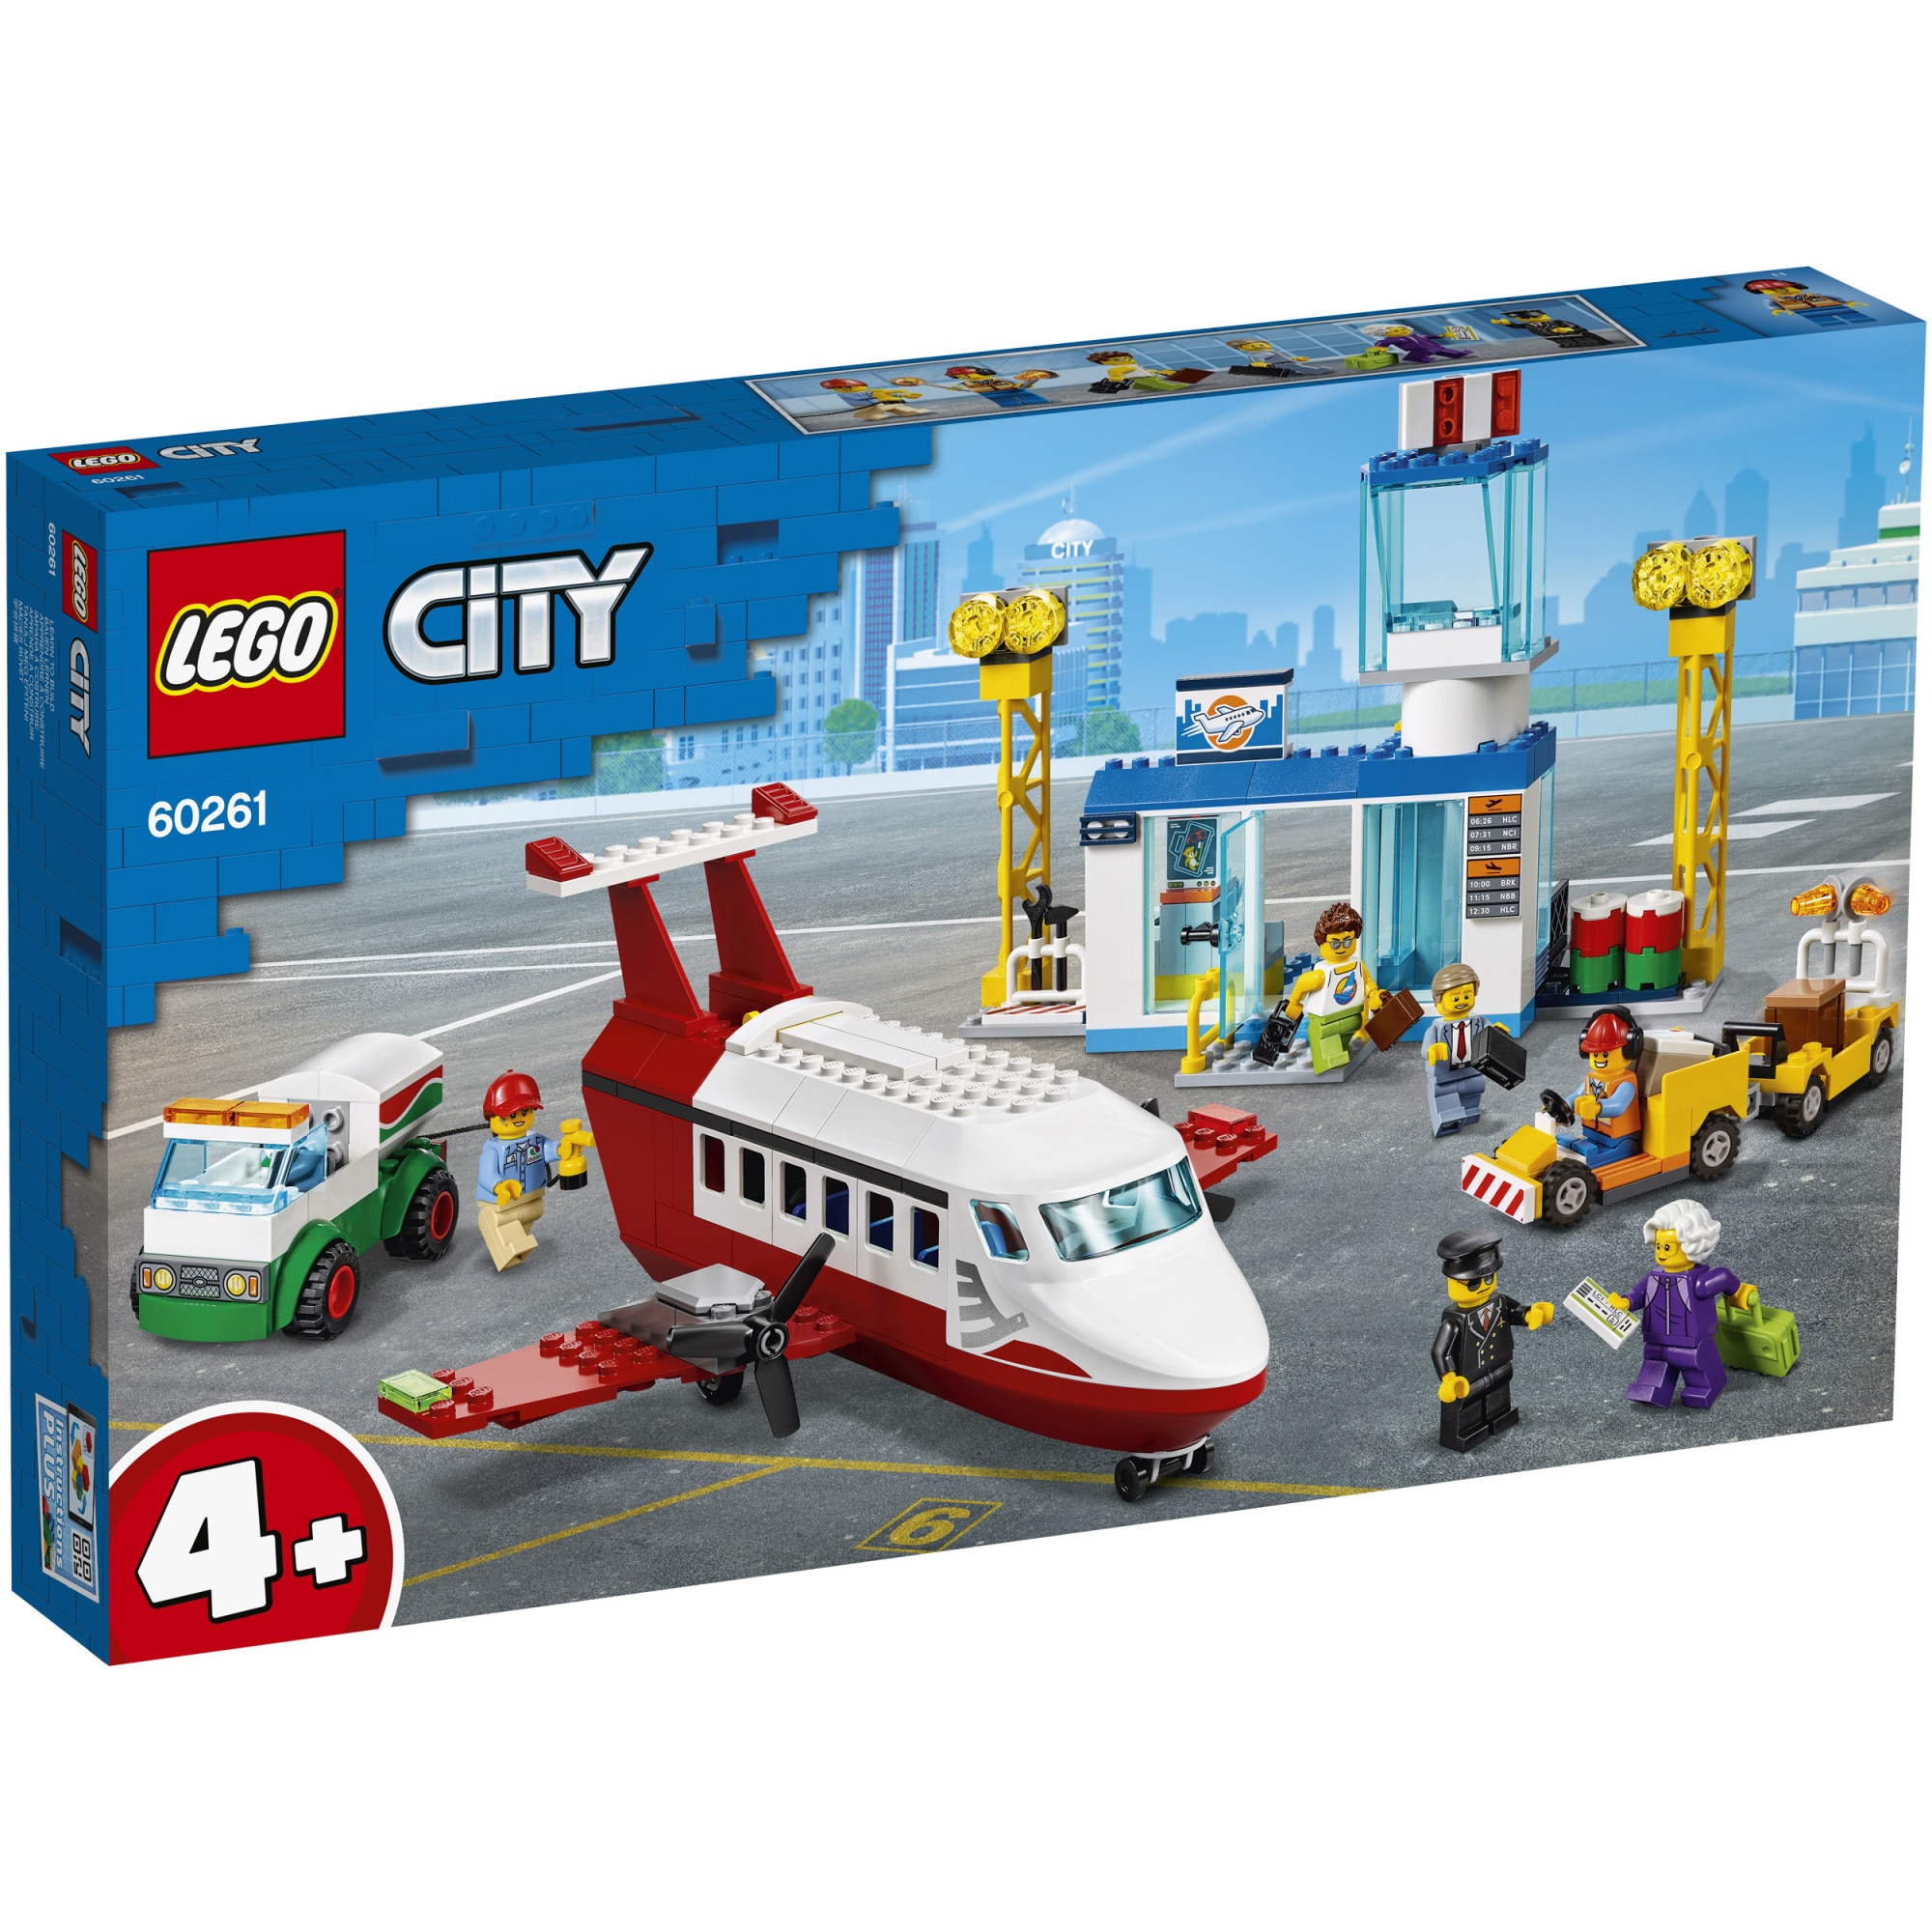 Fotografie LEGO City - Aeroport central 60261, 286 piese